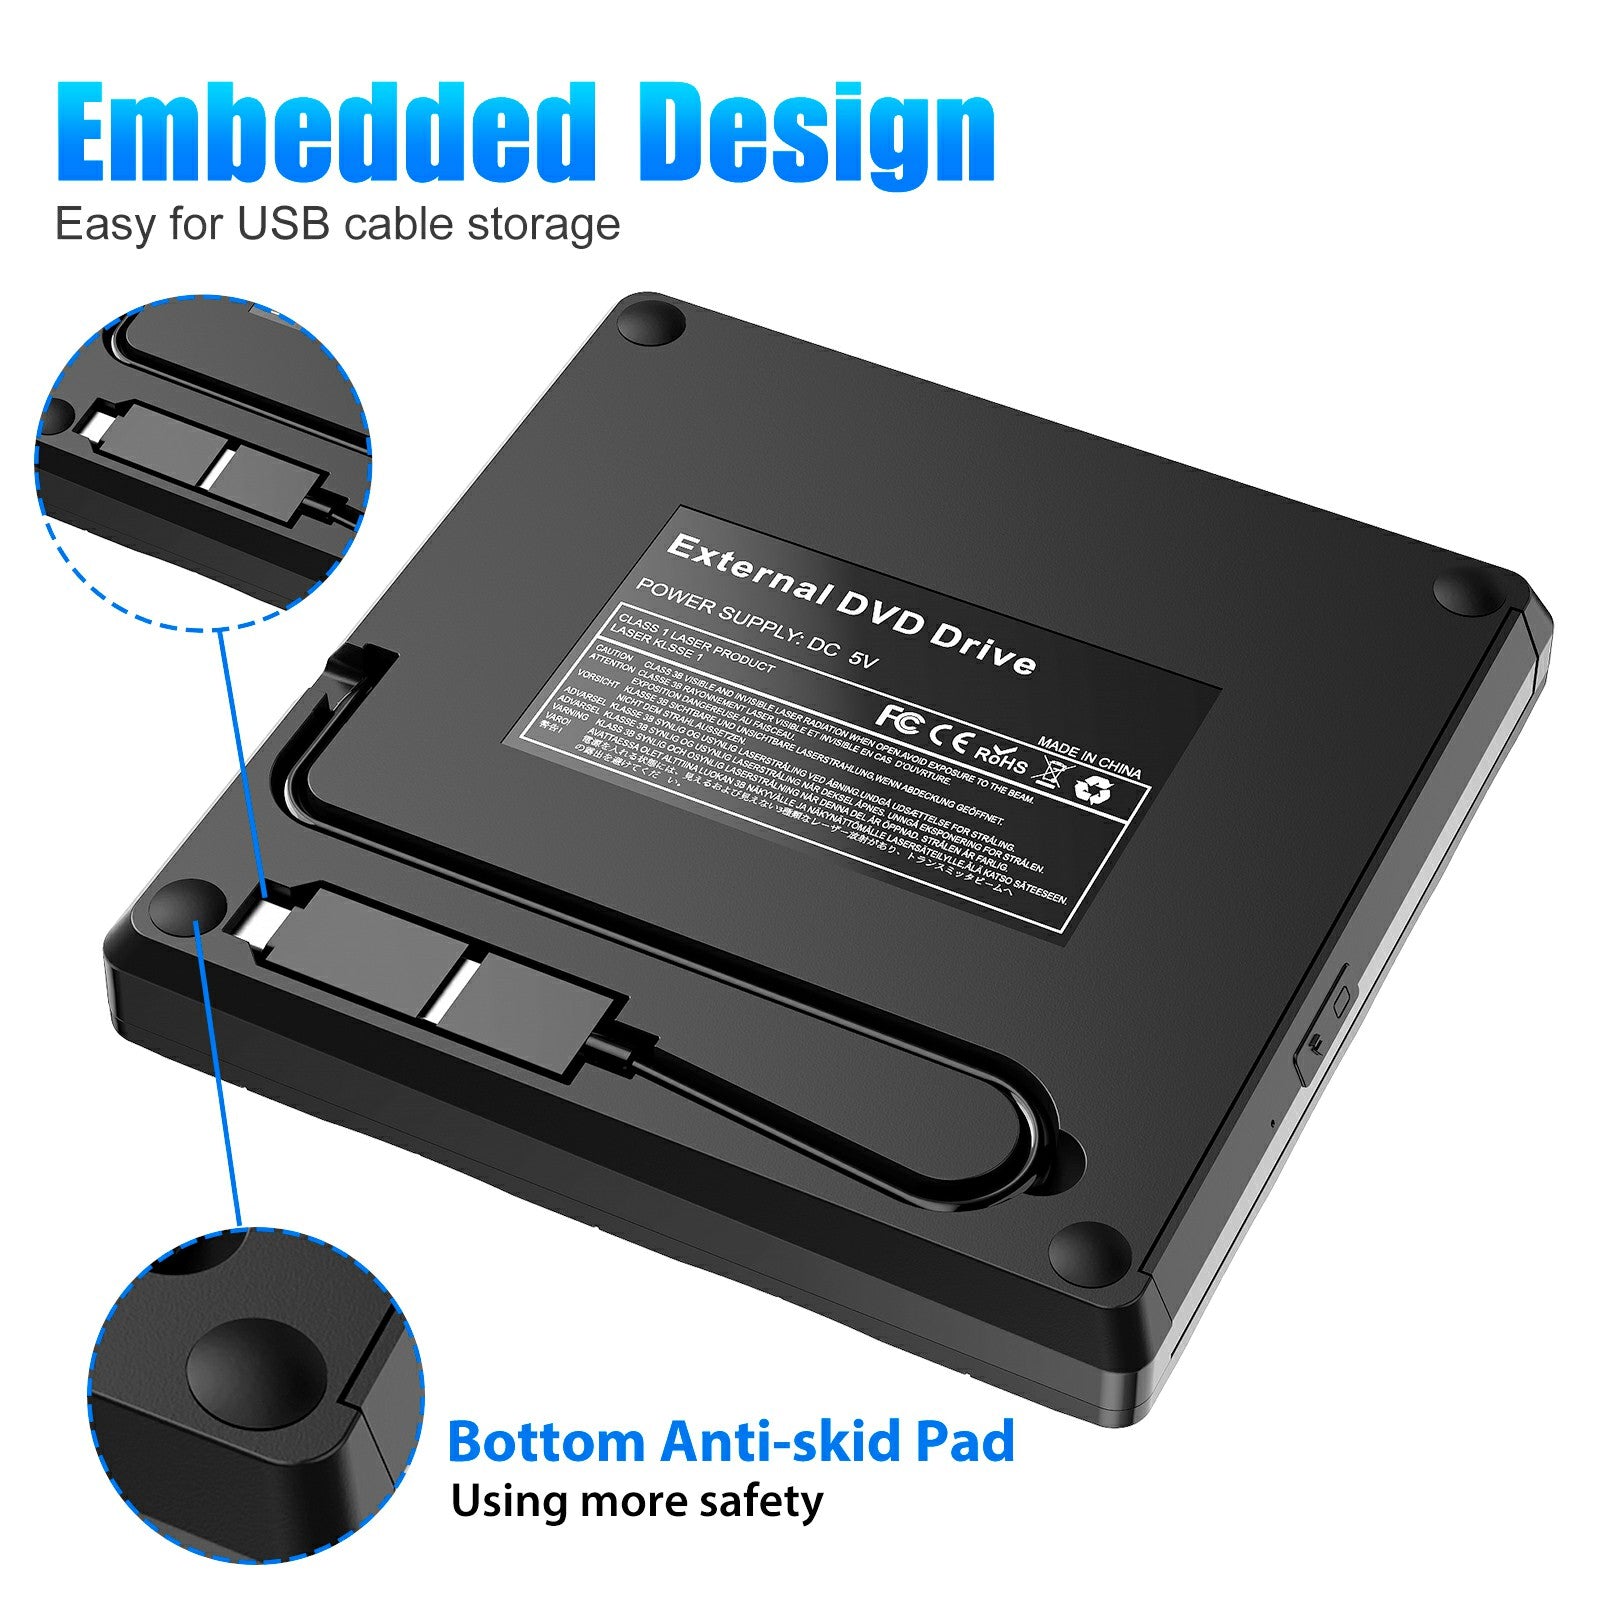 Portable Slim CD / DVD Drive for Laptop USB3.0 External DVD Burner Optical Disk Drive for Windows 98 / ME / Mac OS8.6